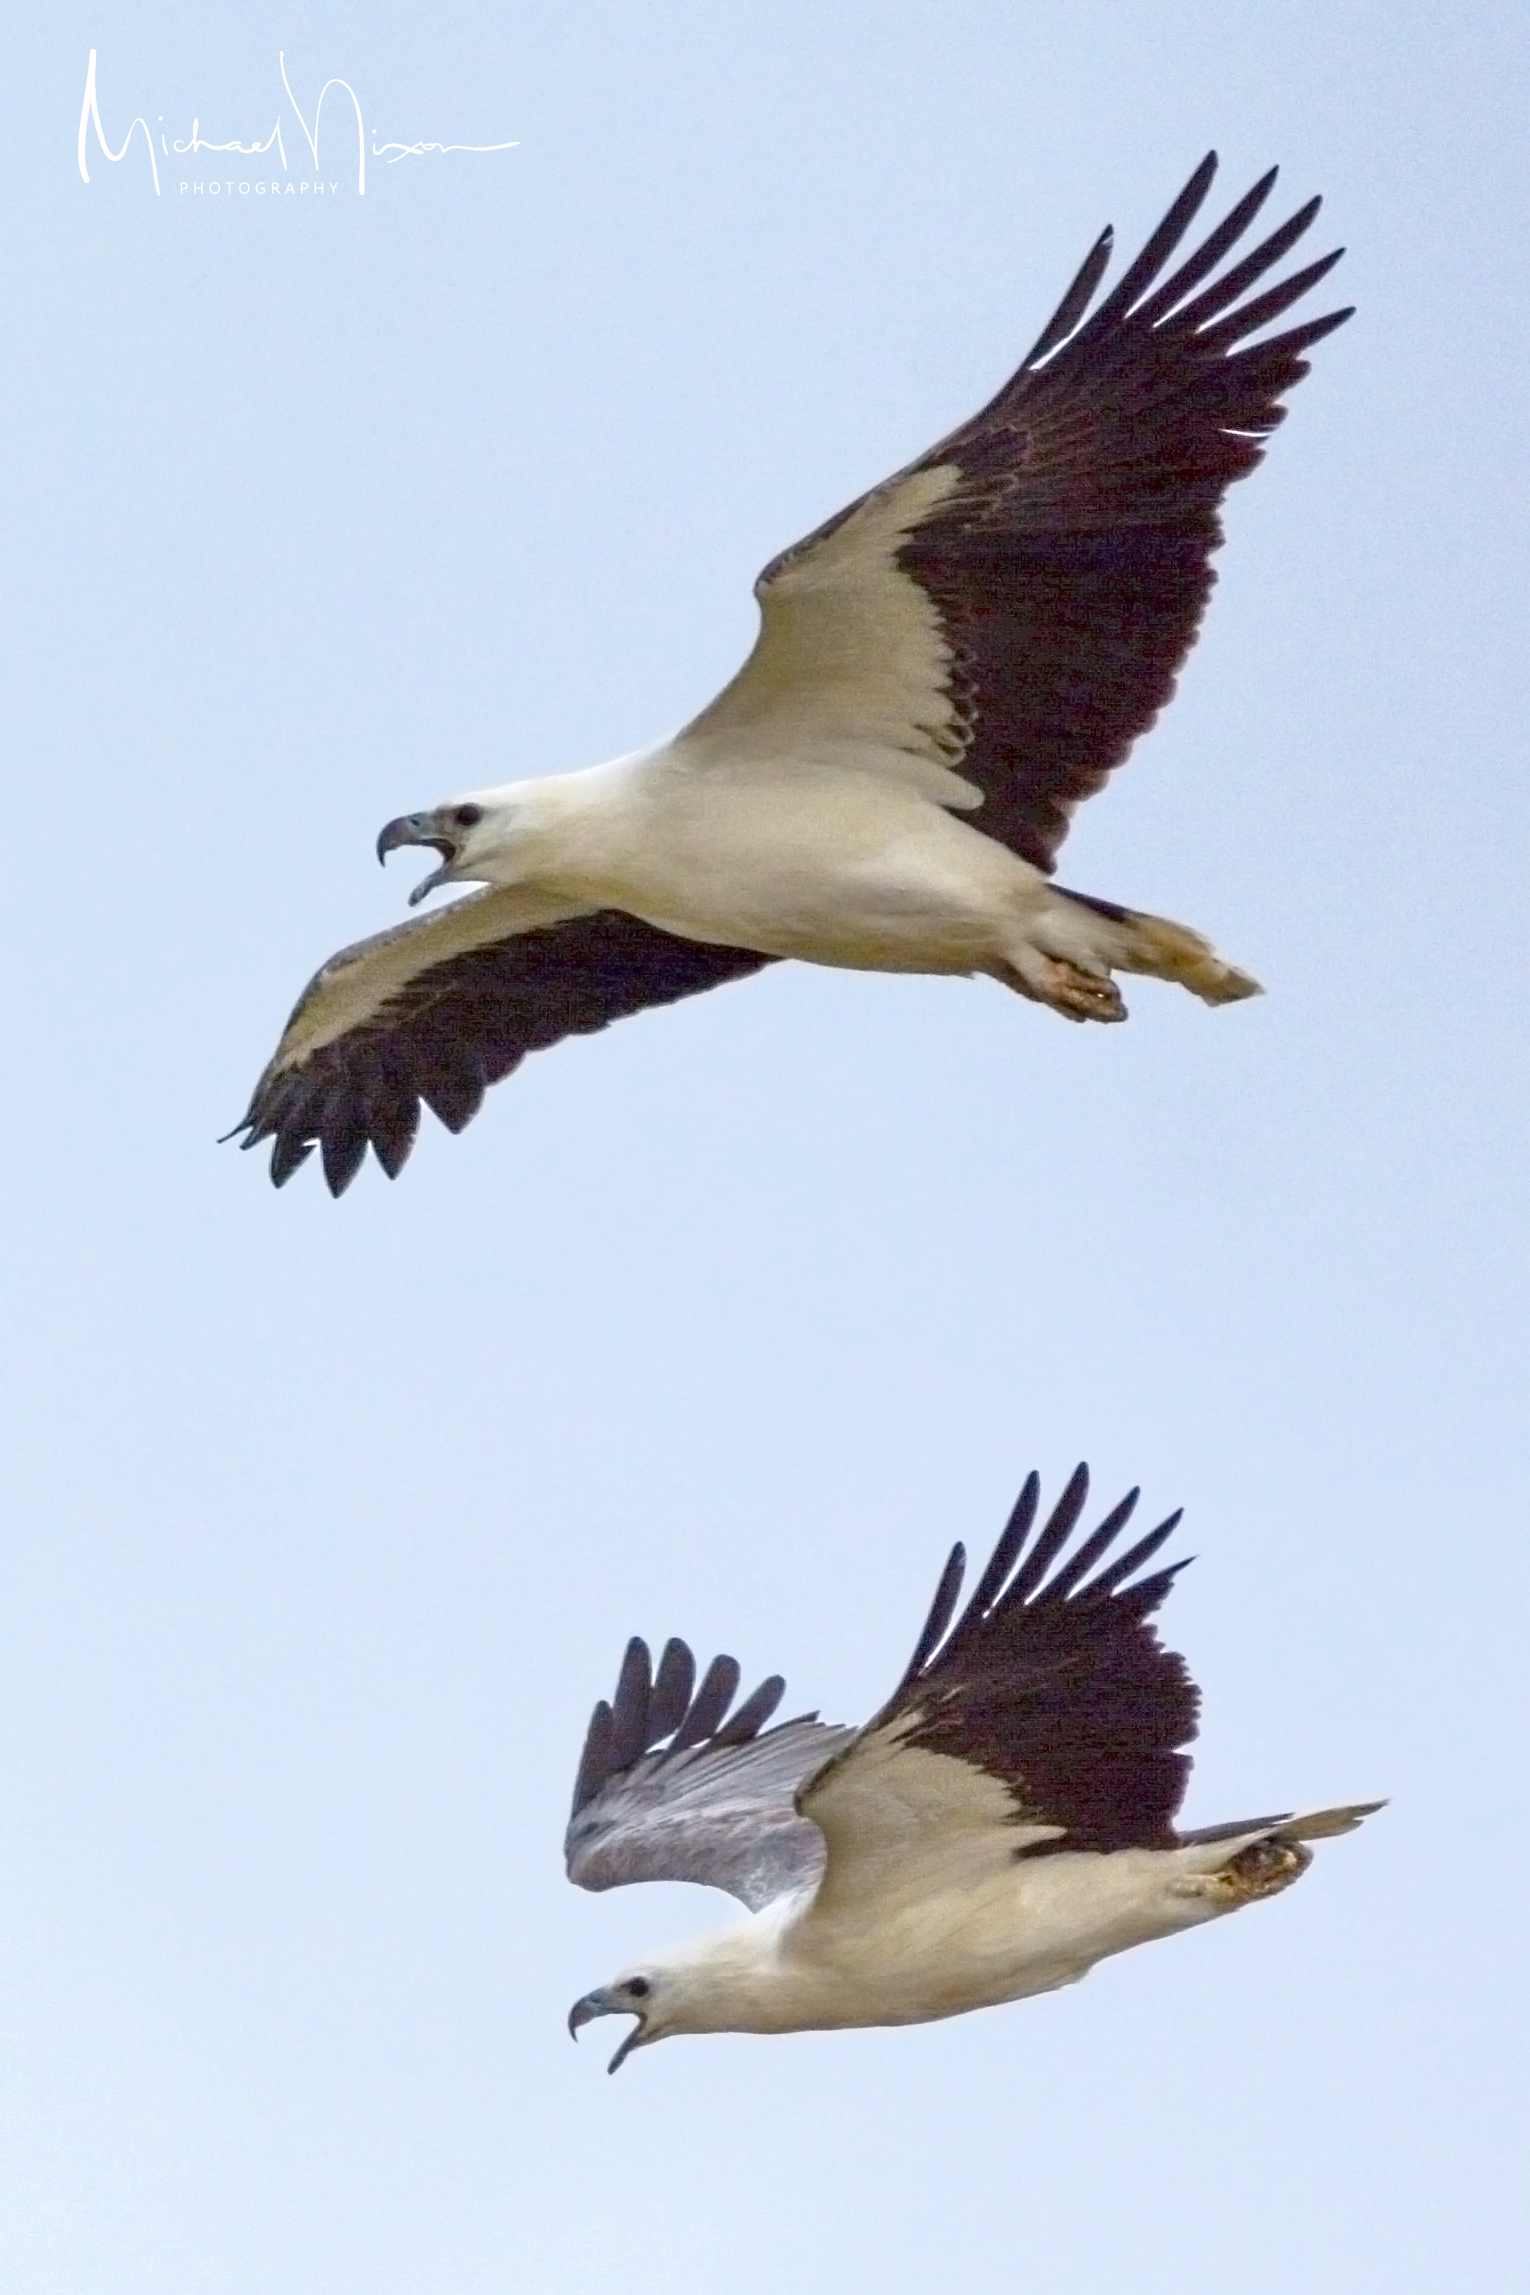 White-bellied Sea Eagles